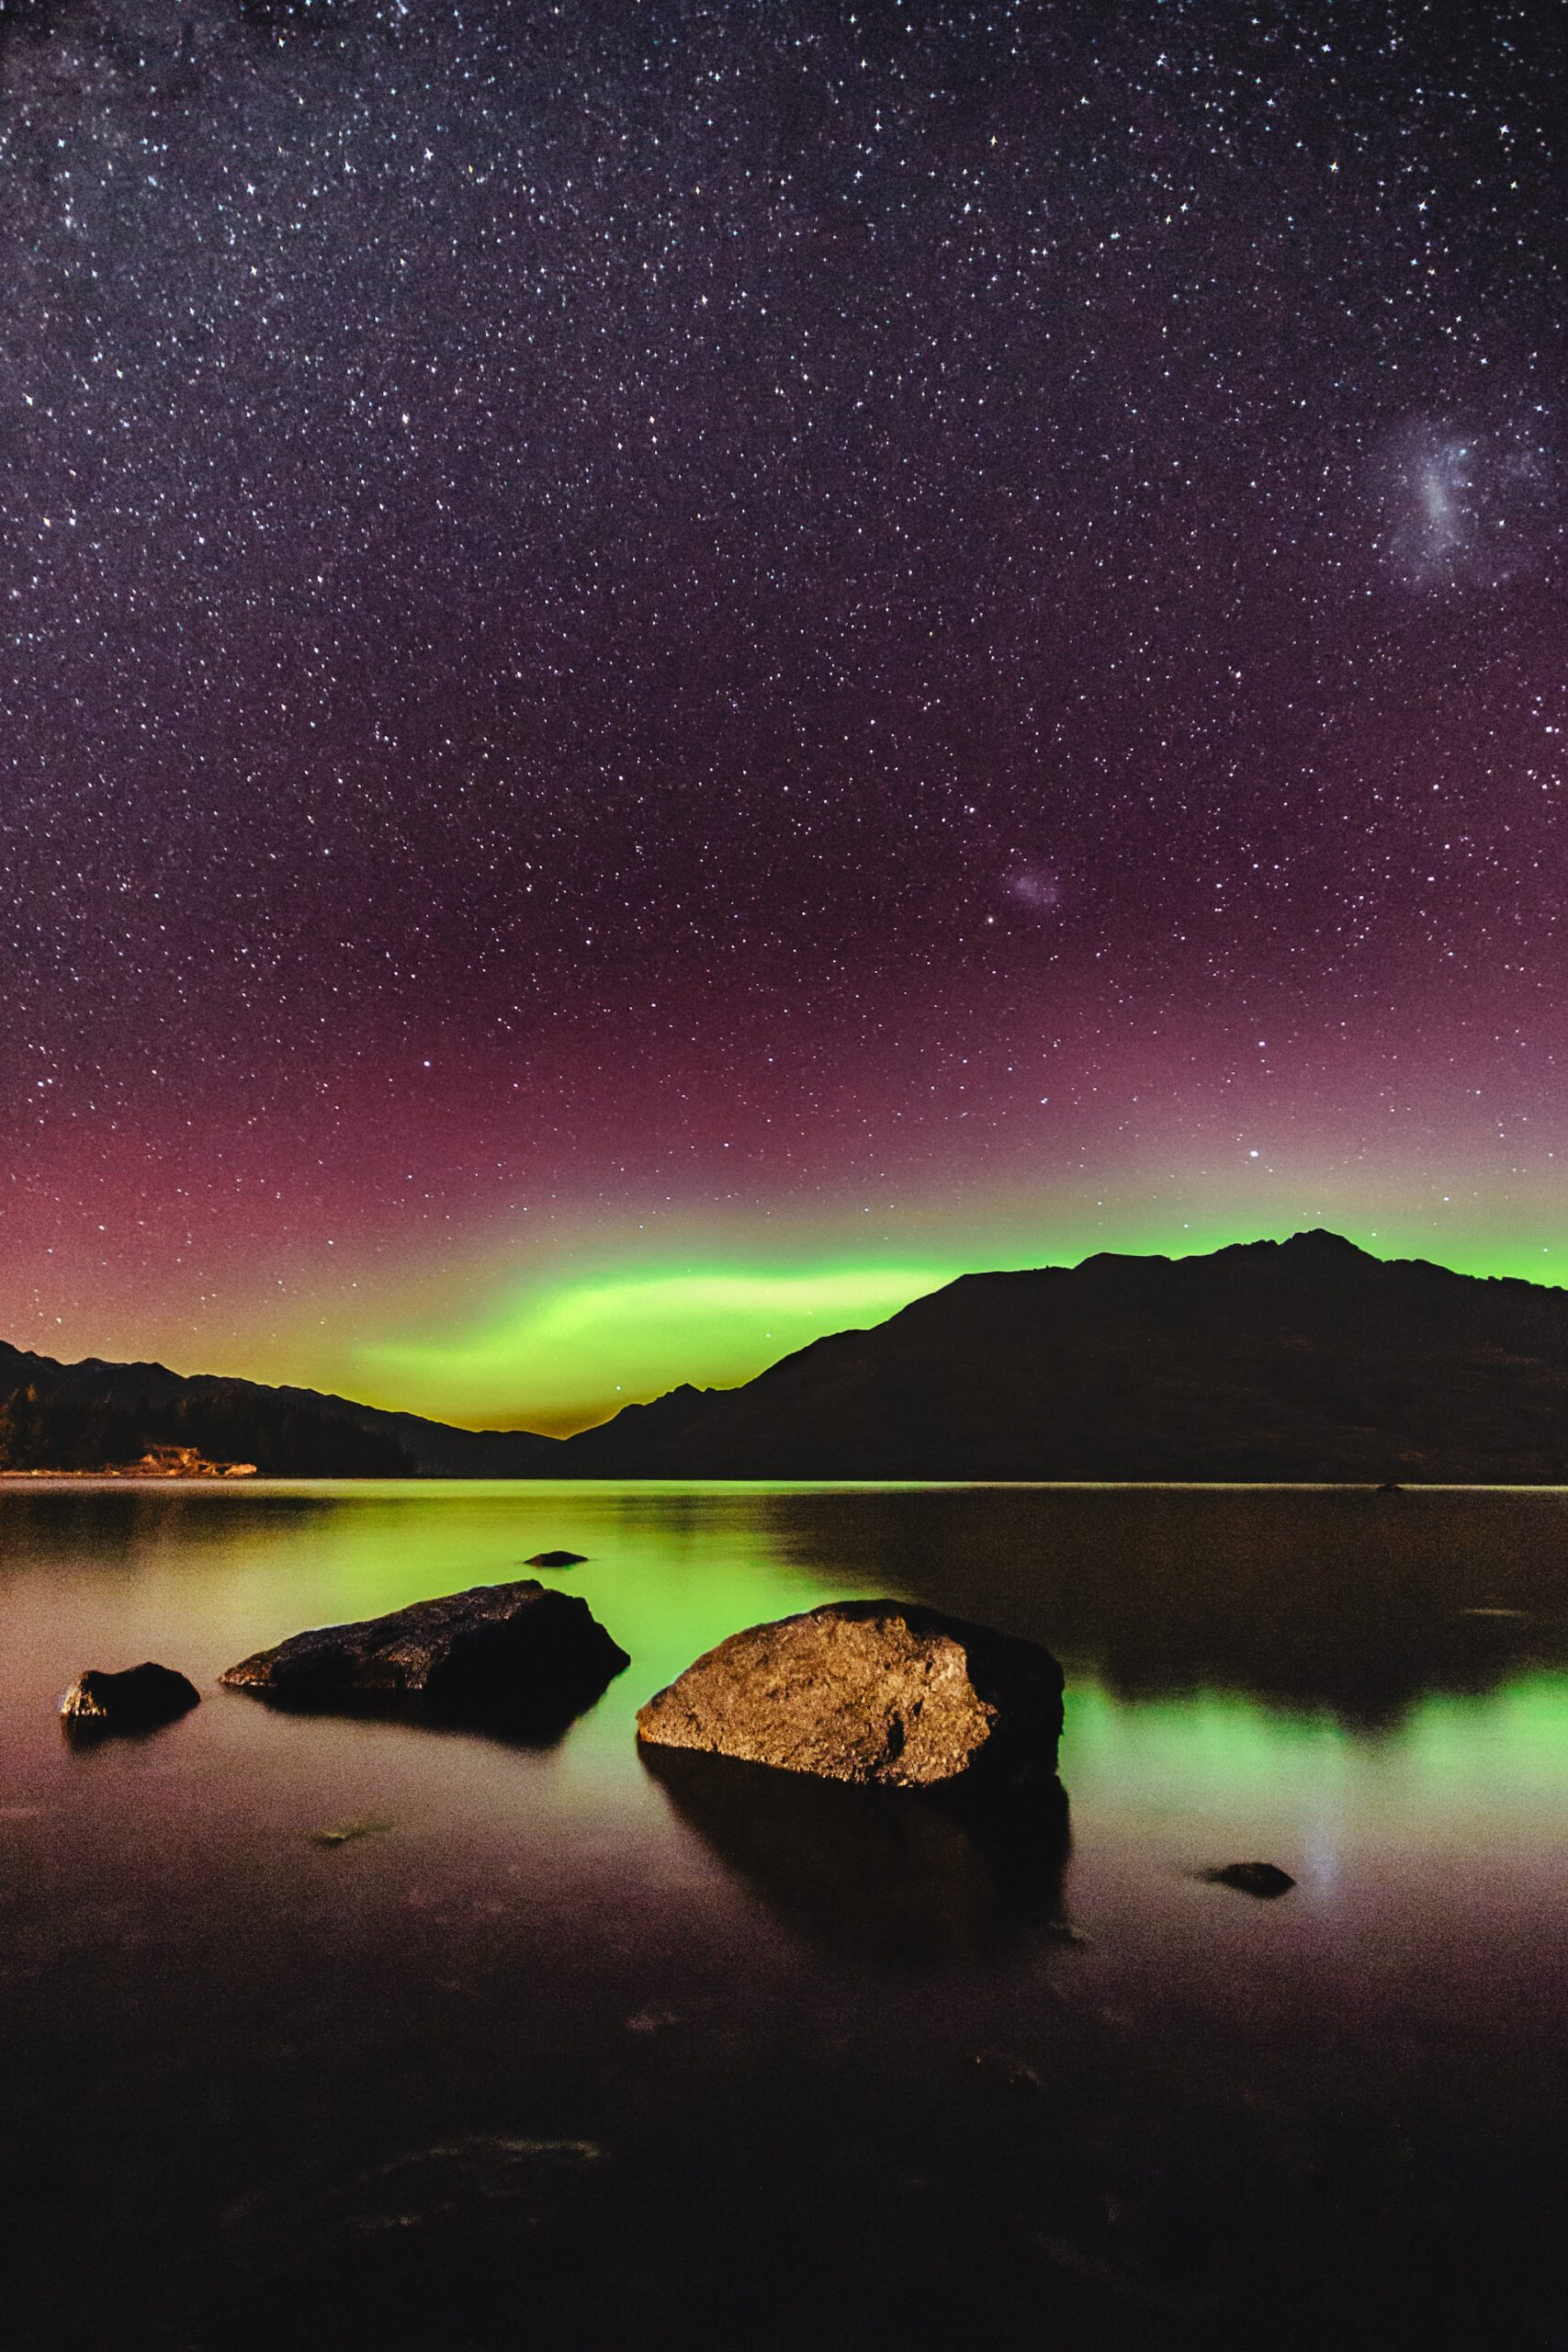 The Aurora Australis lighting up the skies over New Zealand